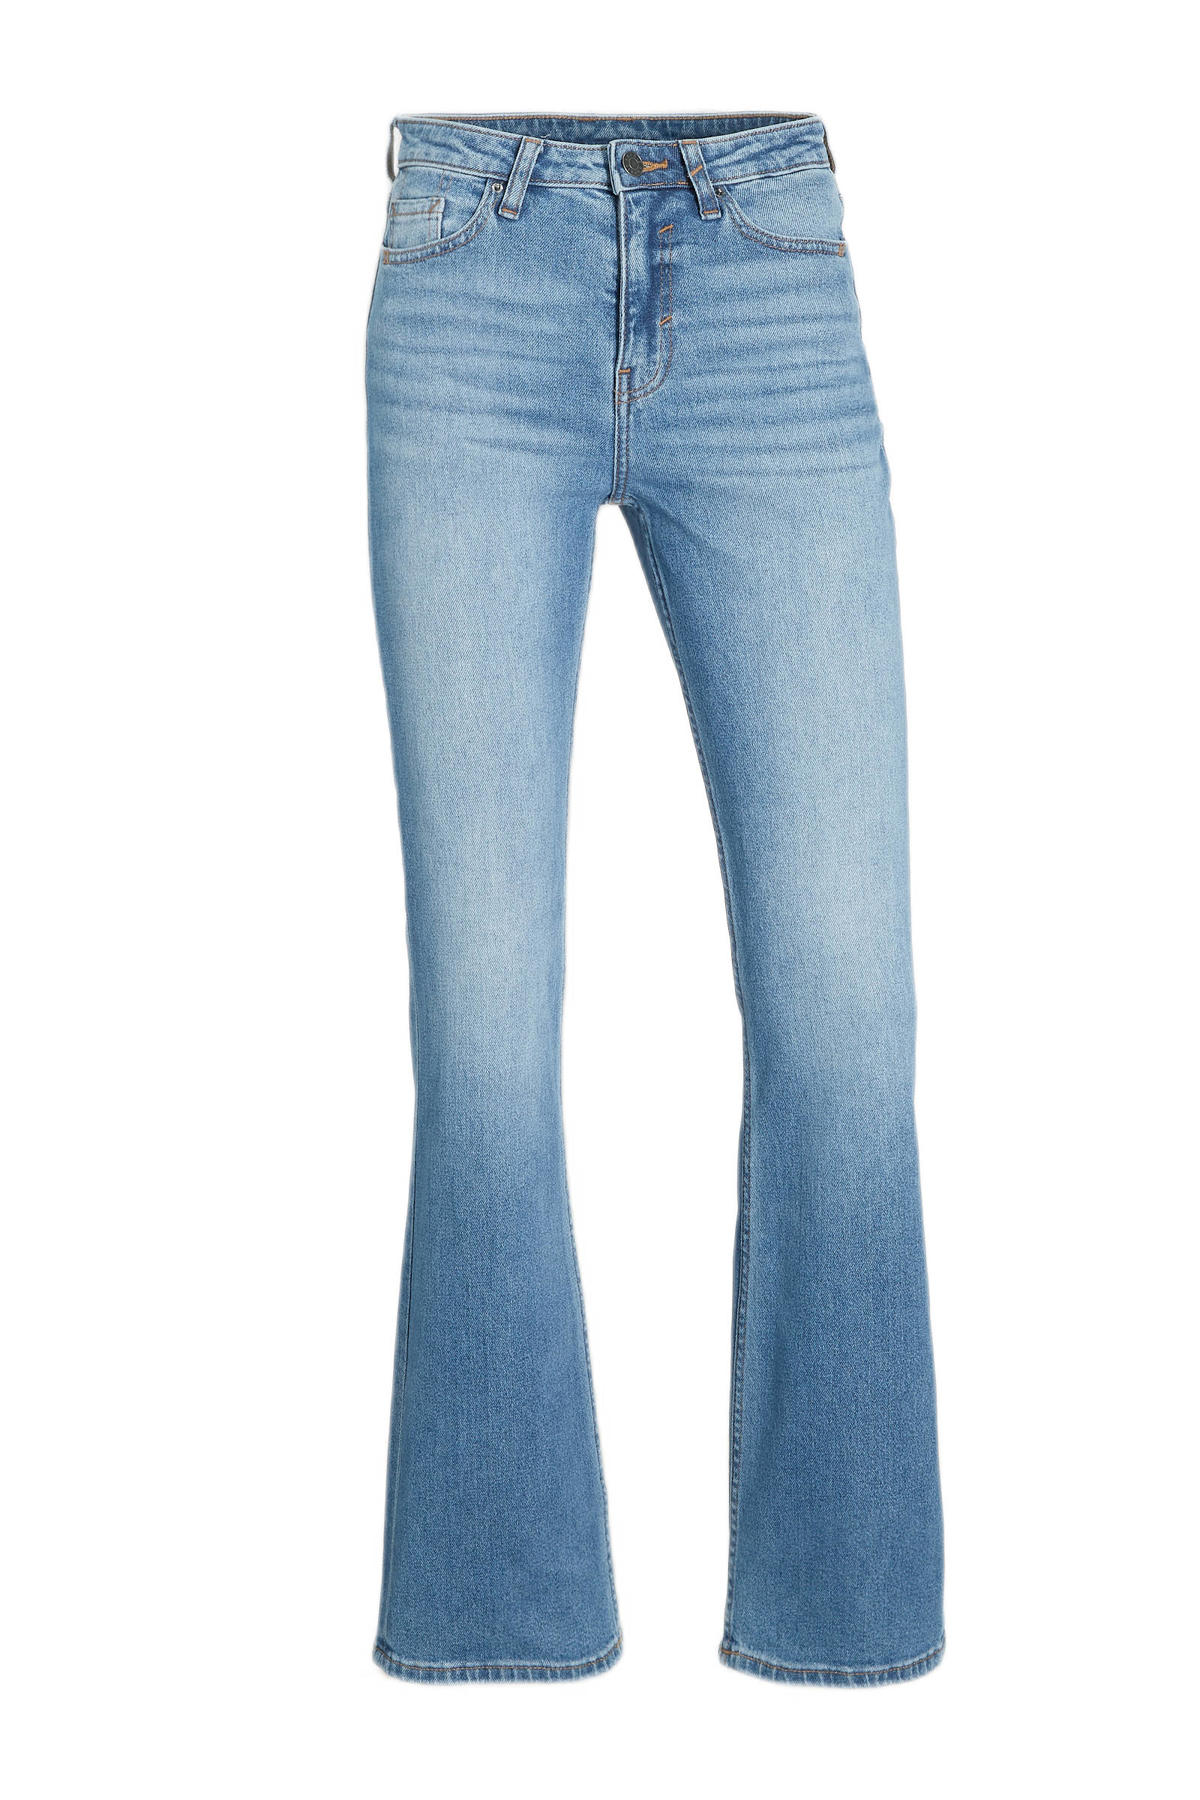 ESPRIT jeans blue light | wehkamp